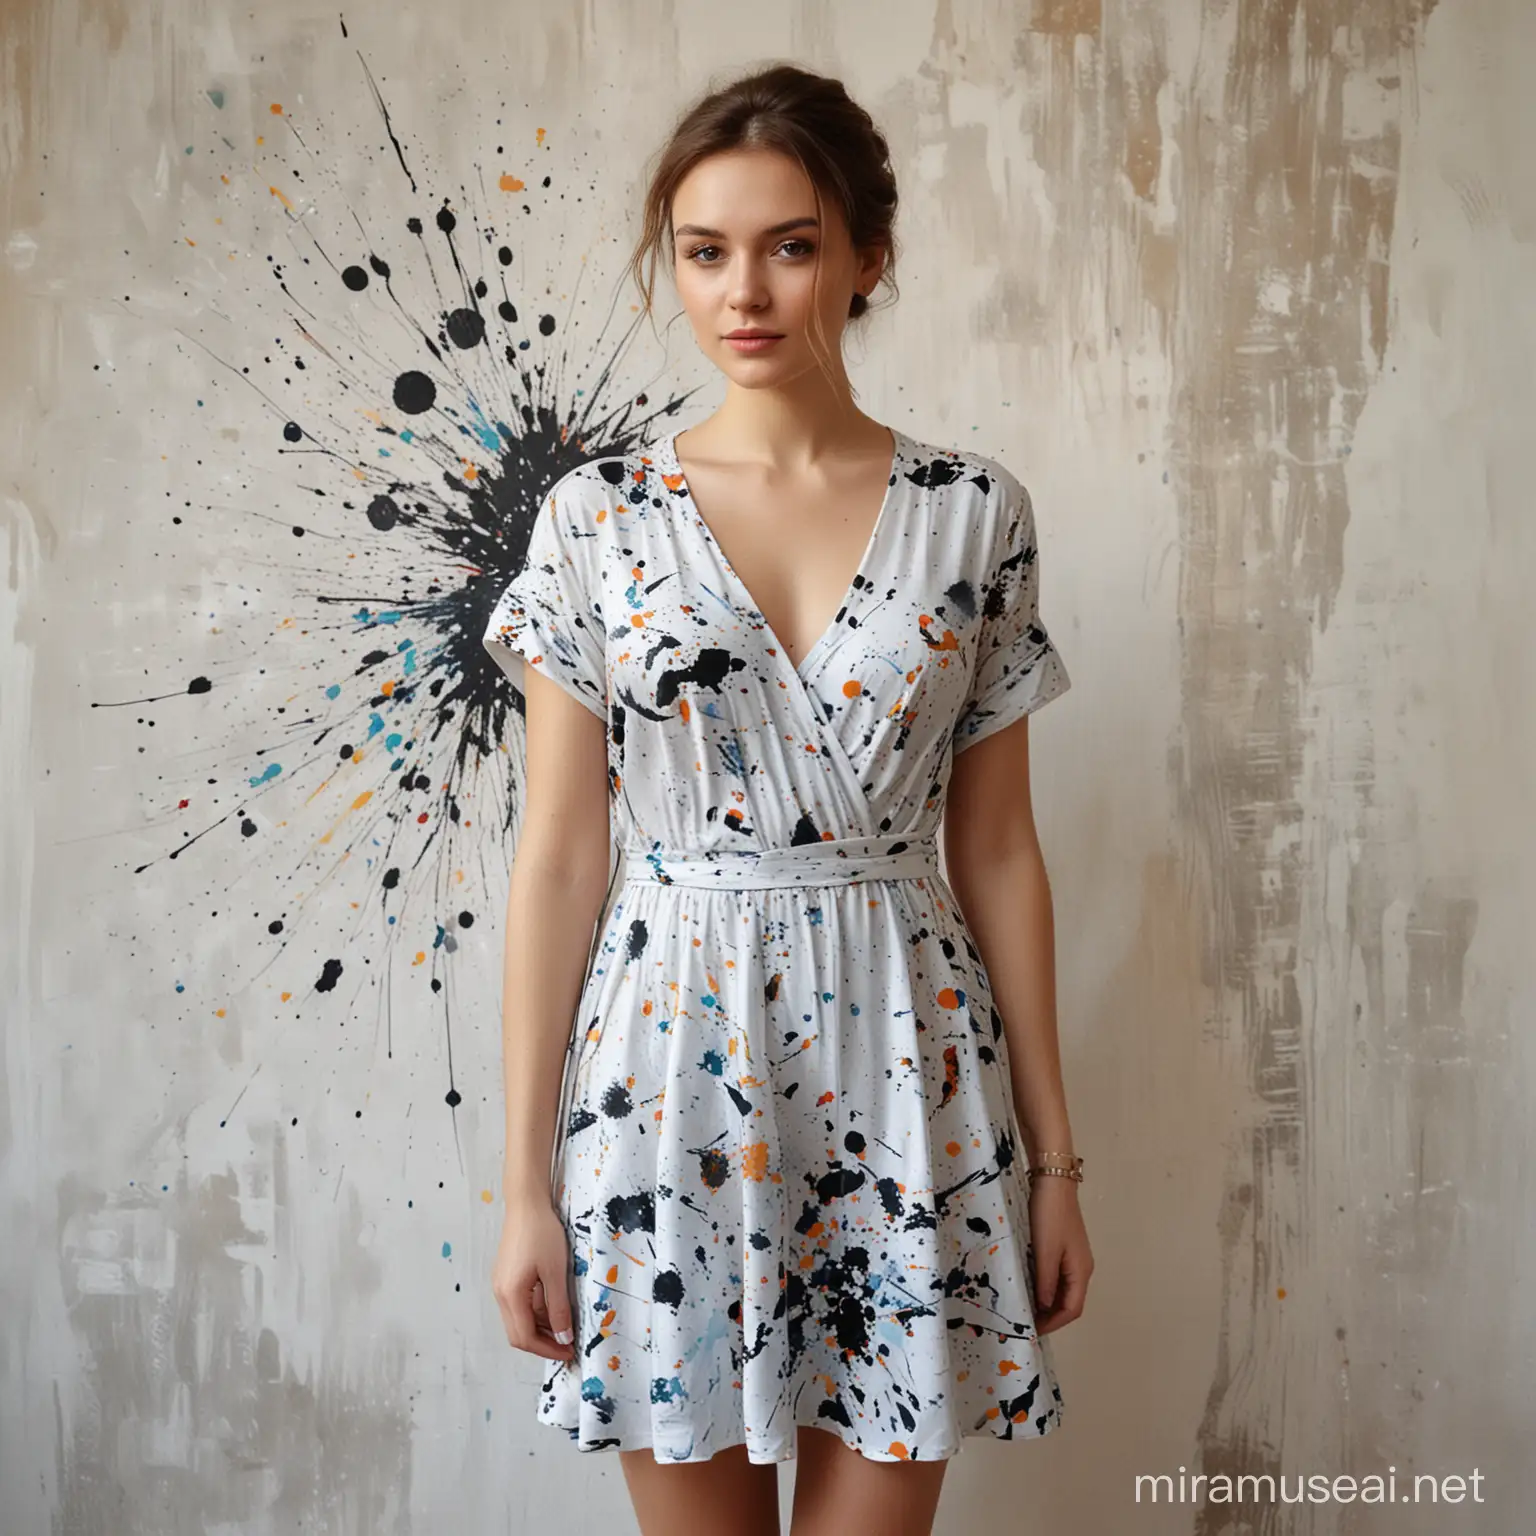  Mariya Berseneva painting a picture, paint splatters, modern day, muse, greek style dress